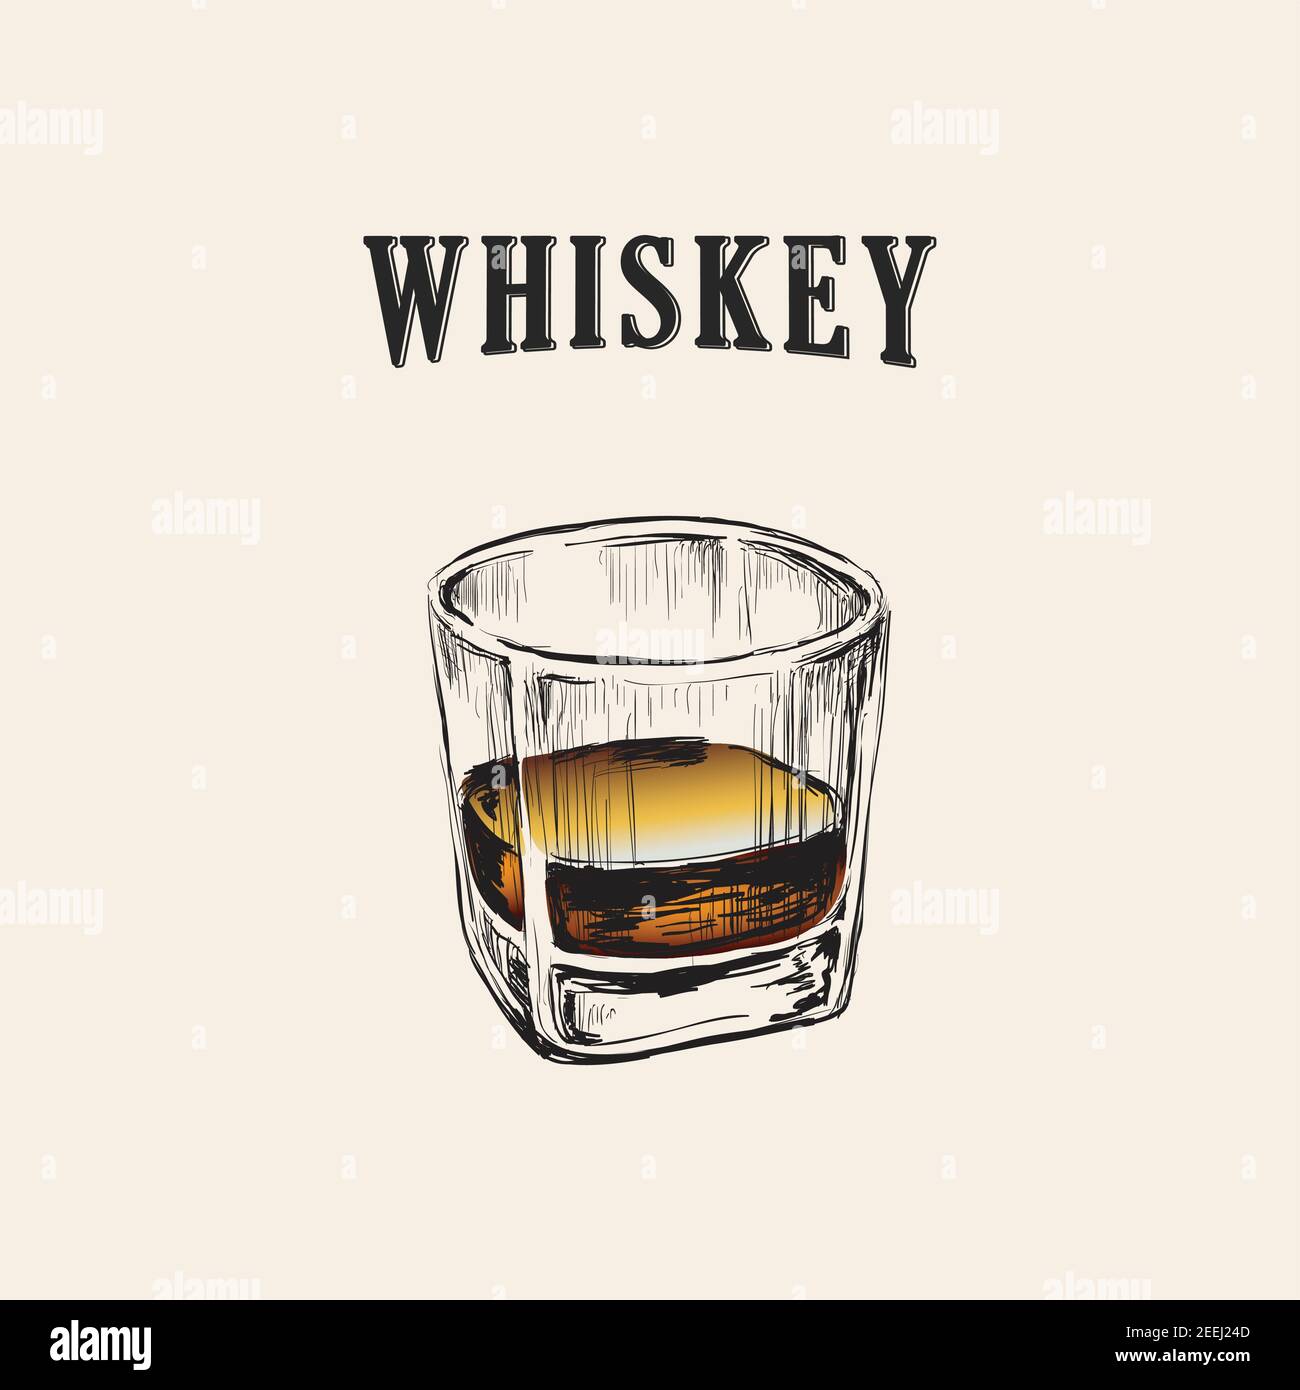 Whiskey Glass Hand Drawn Drink Illustration Stock Vector Image & Art - Alamy